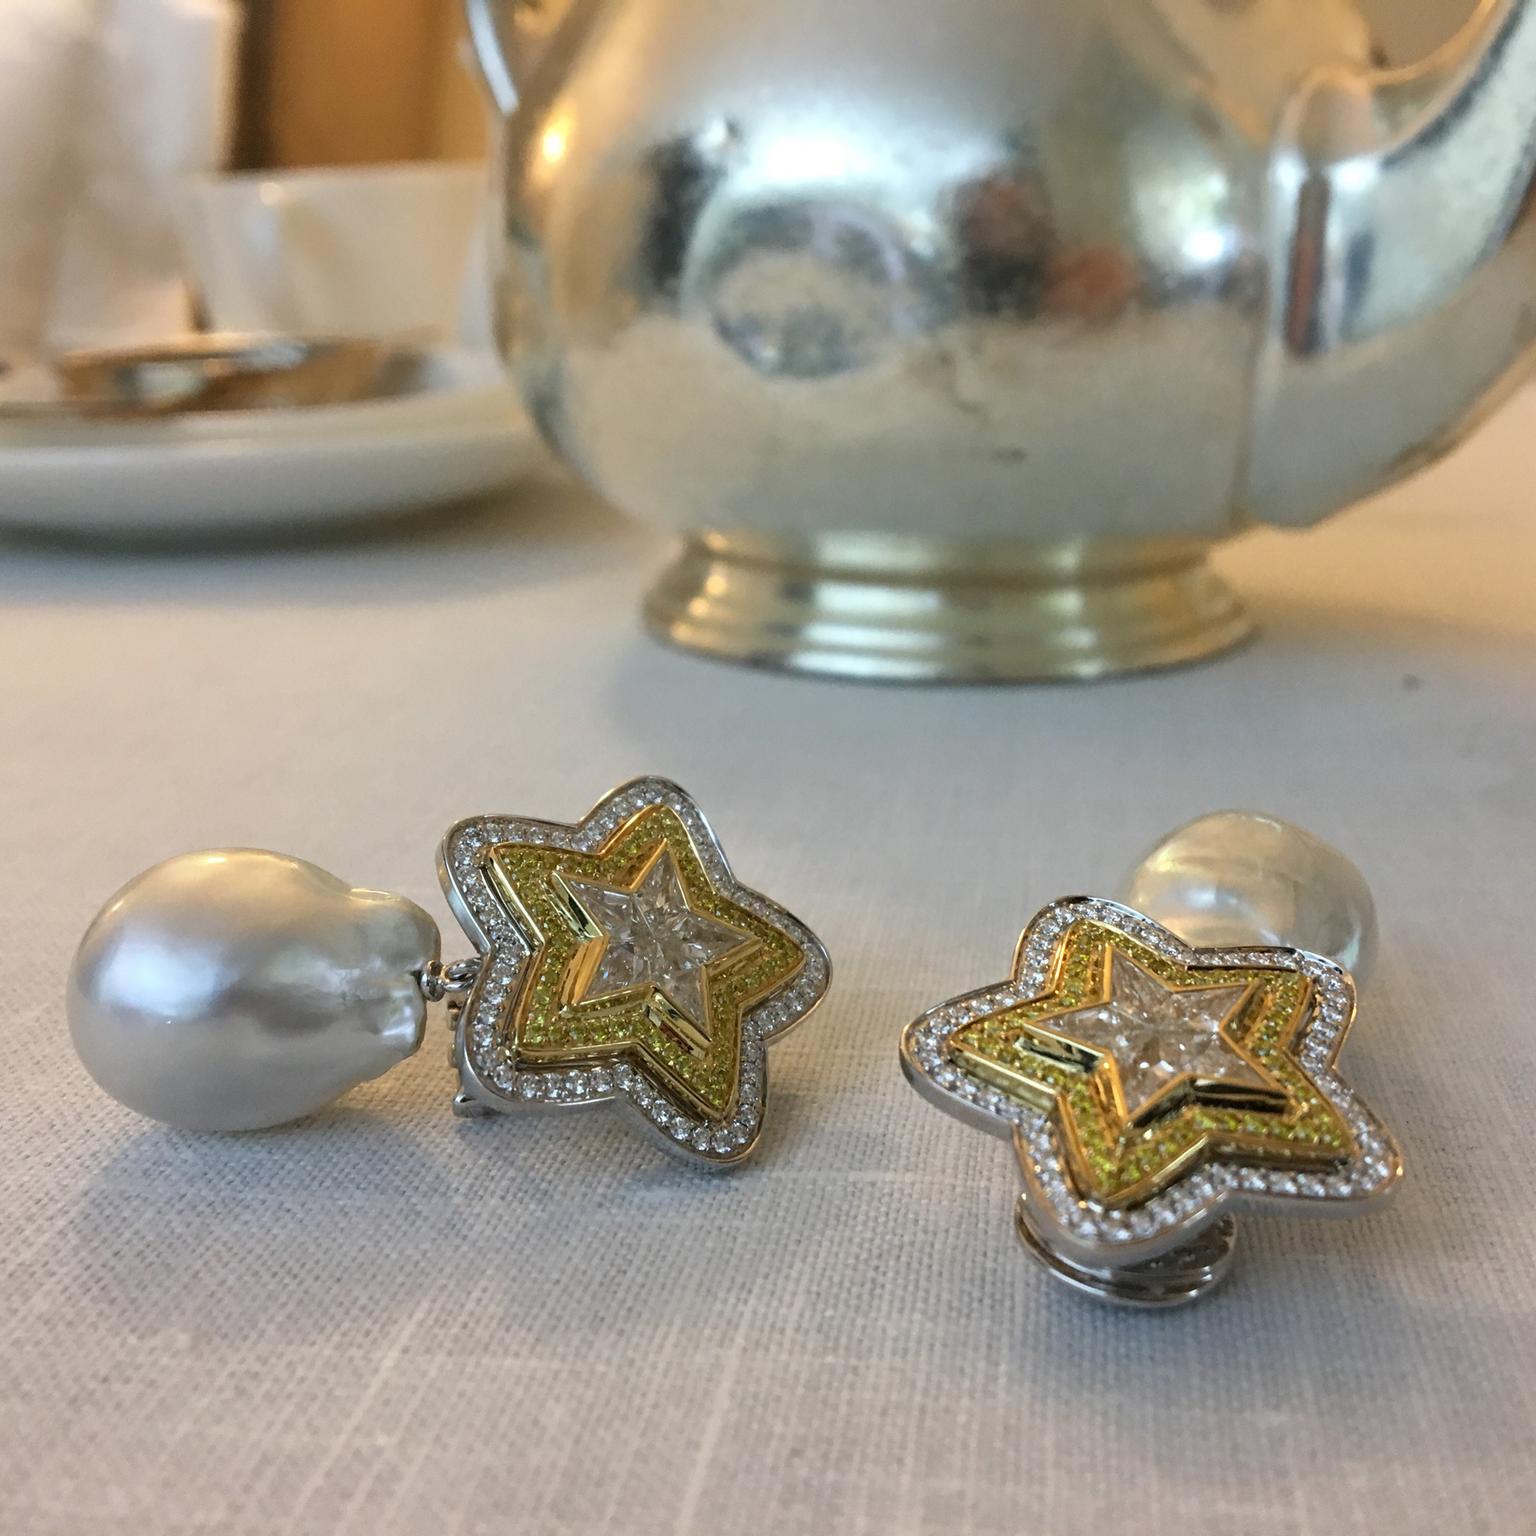 Margot McKinney Star baroque pearl earrings 